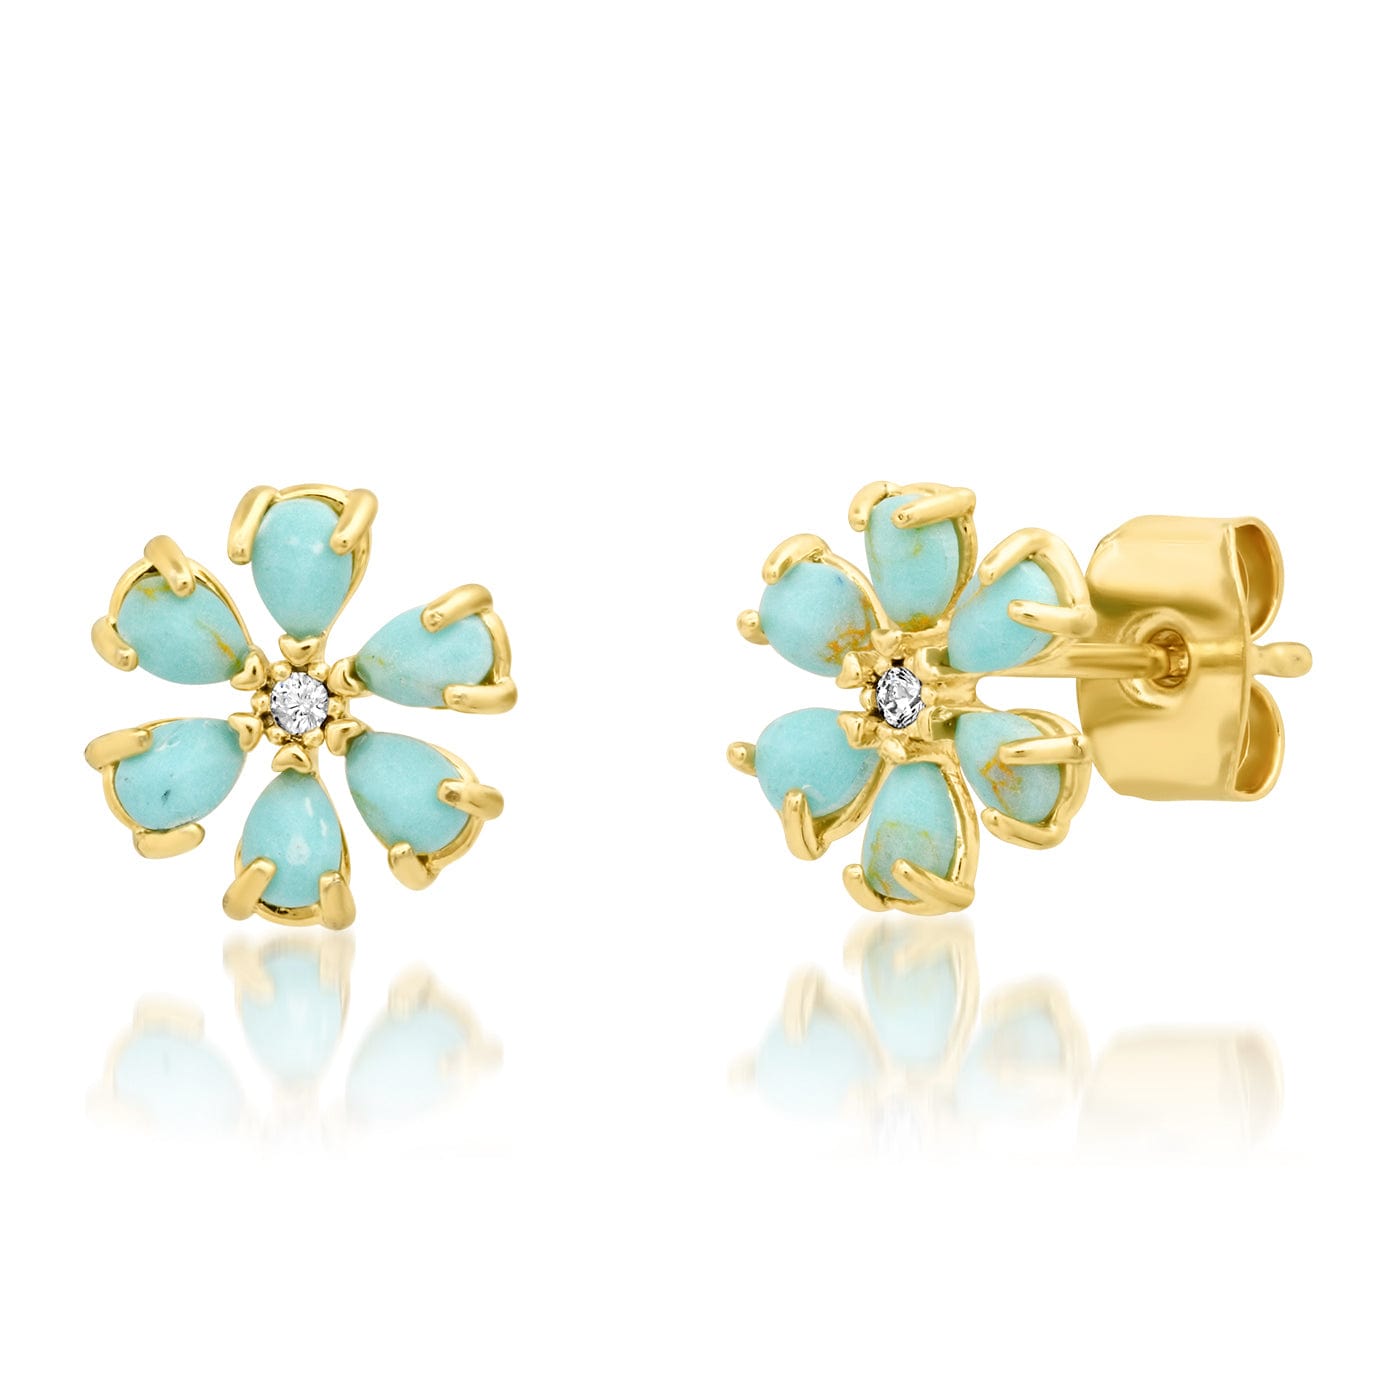 TAI JEWELRY Earrings Turquoise Stone Petal Flower Post